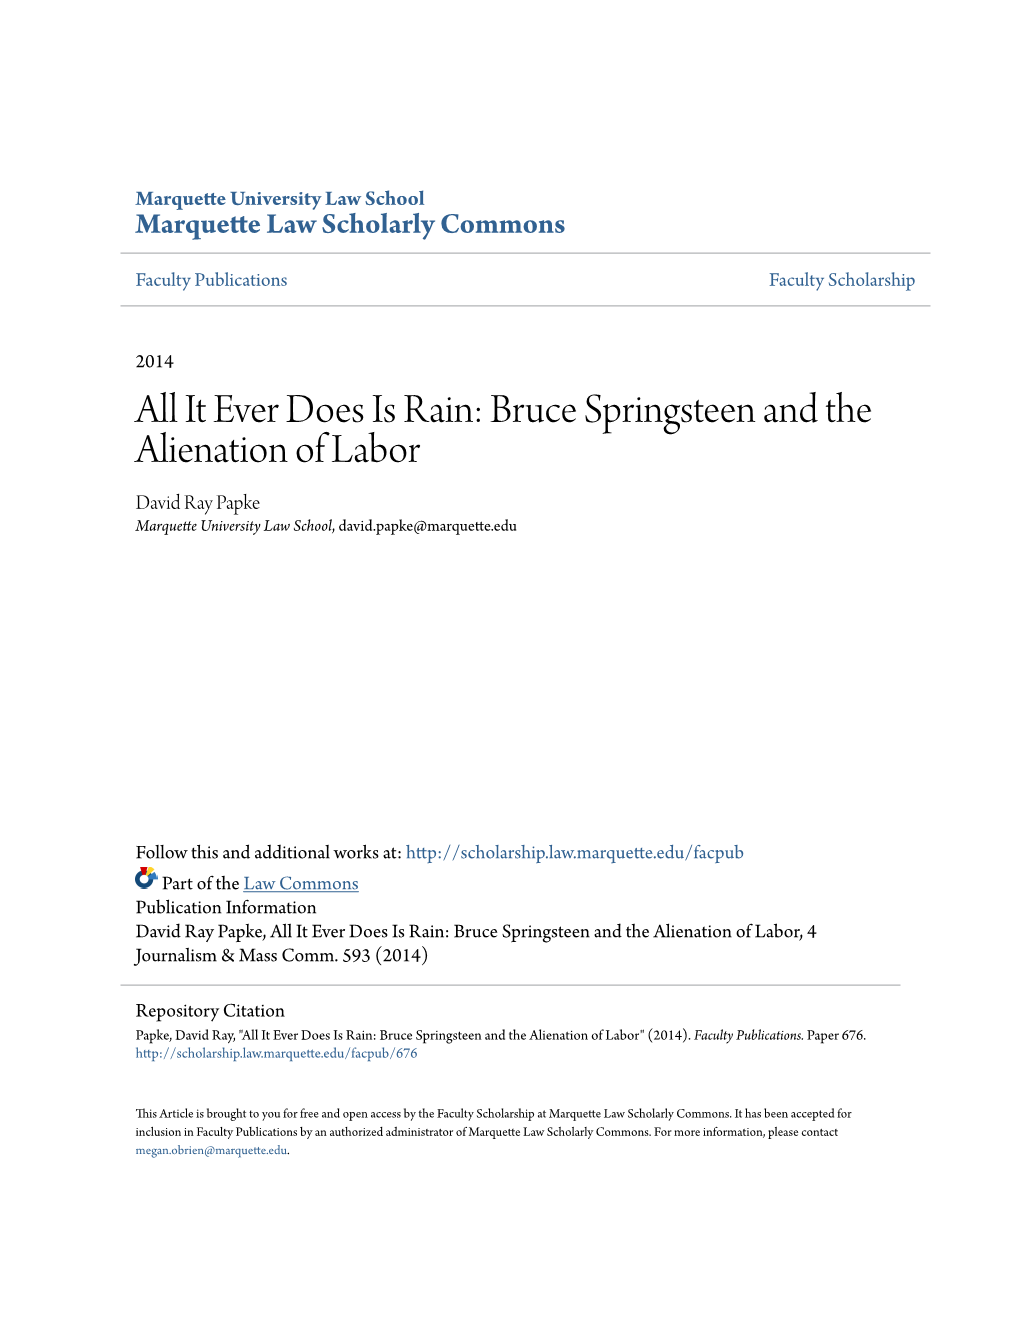 Bruce Springsteen and the Alienation of Labor David Ray Papke Marquette University Law School, David.Papke@Marquette.Edu